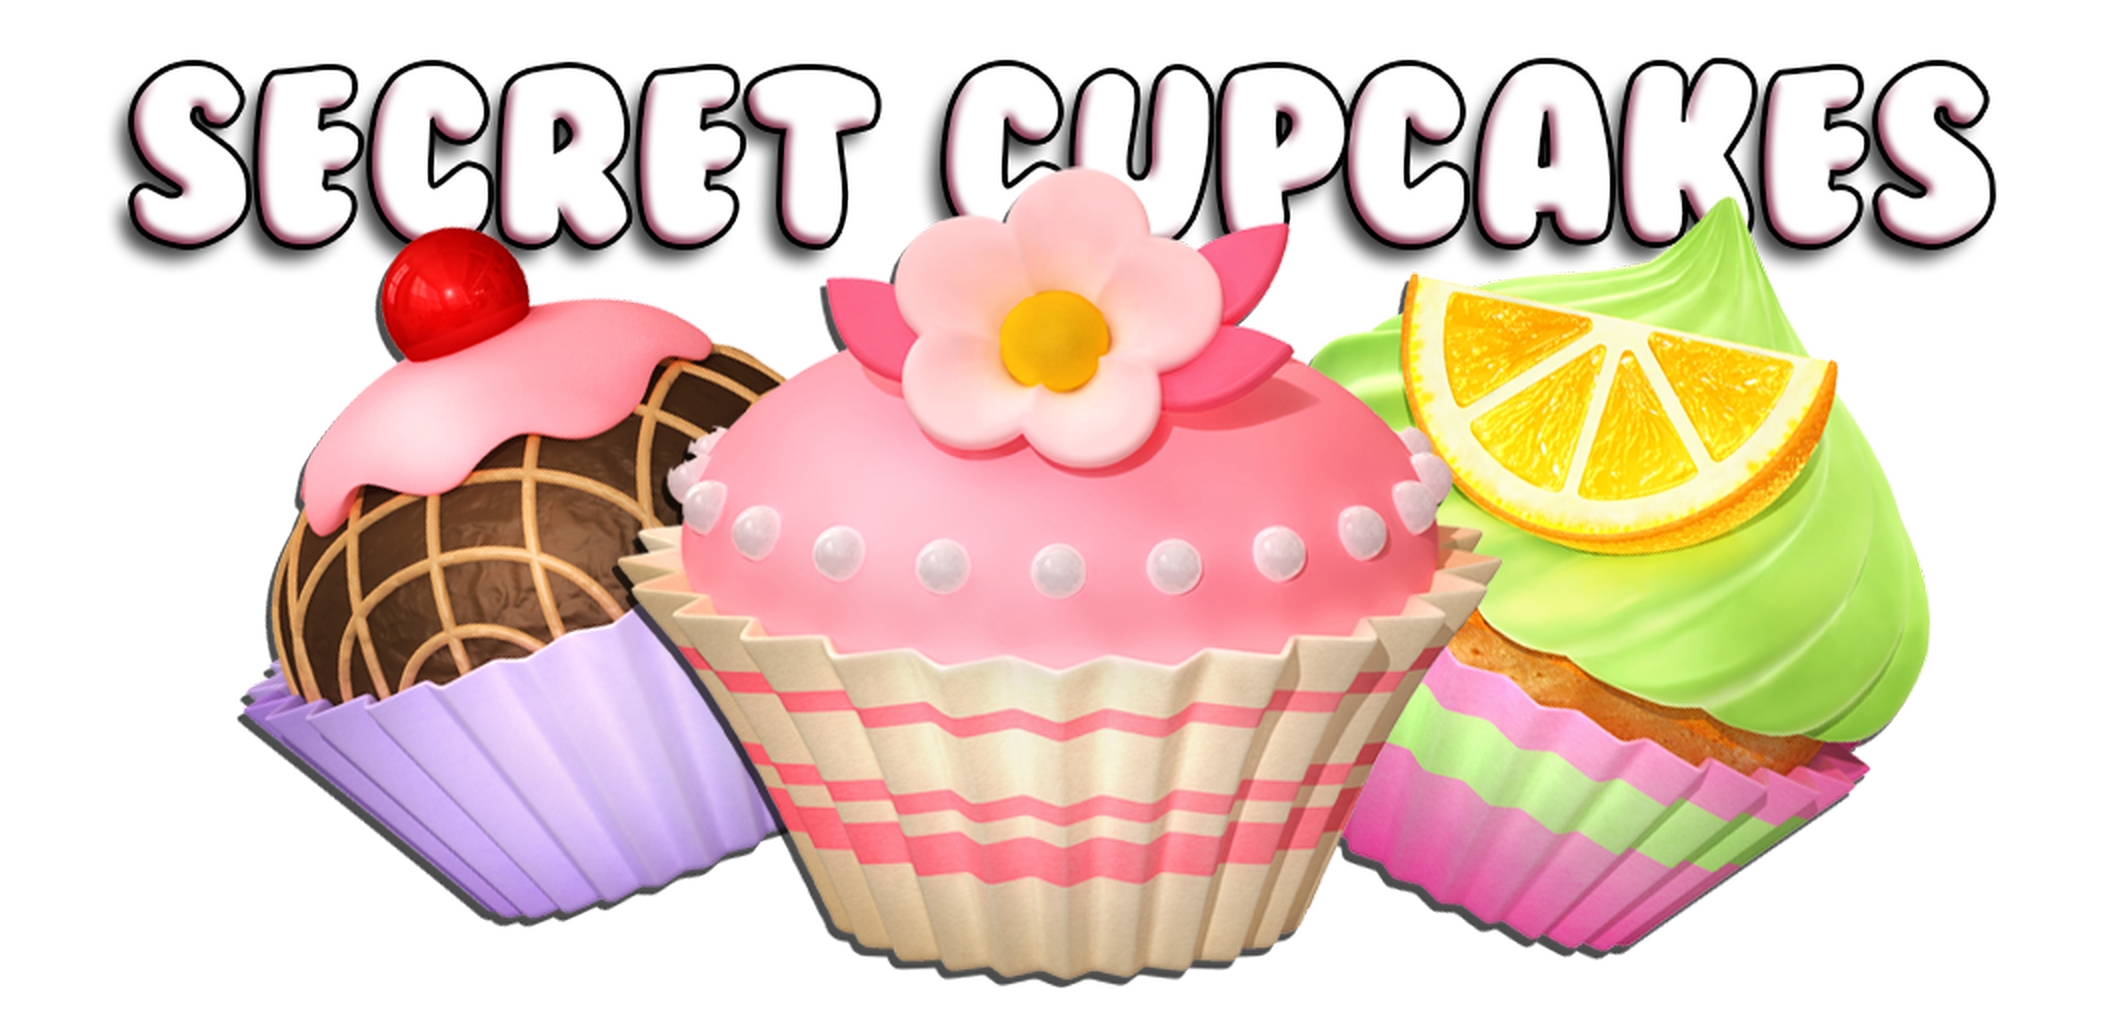 Secret Cupcakes demo